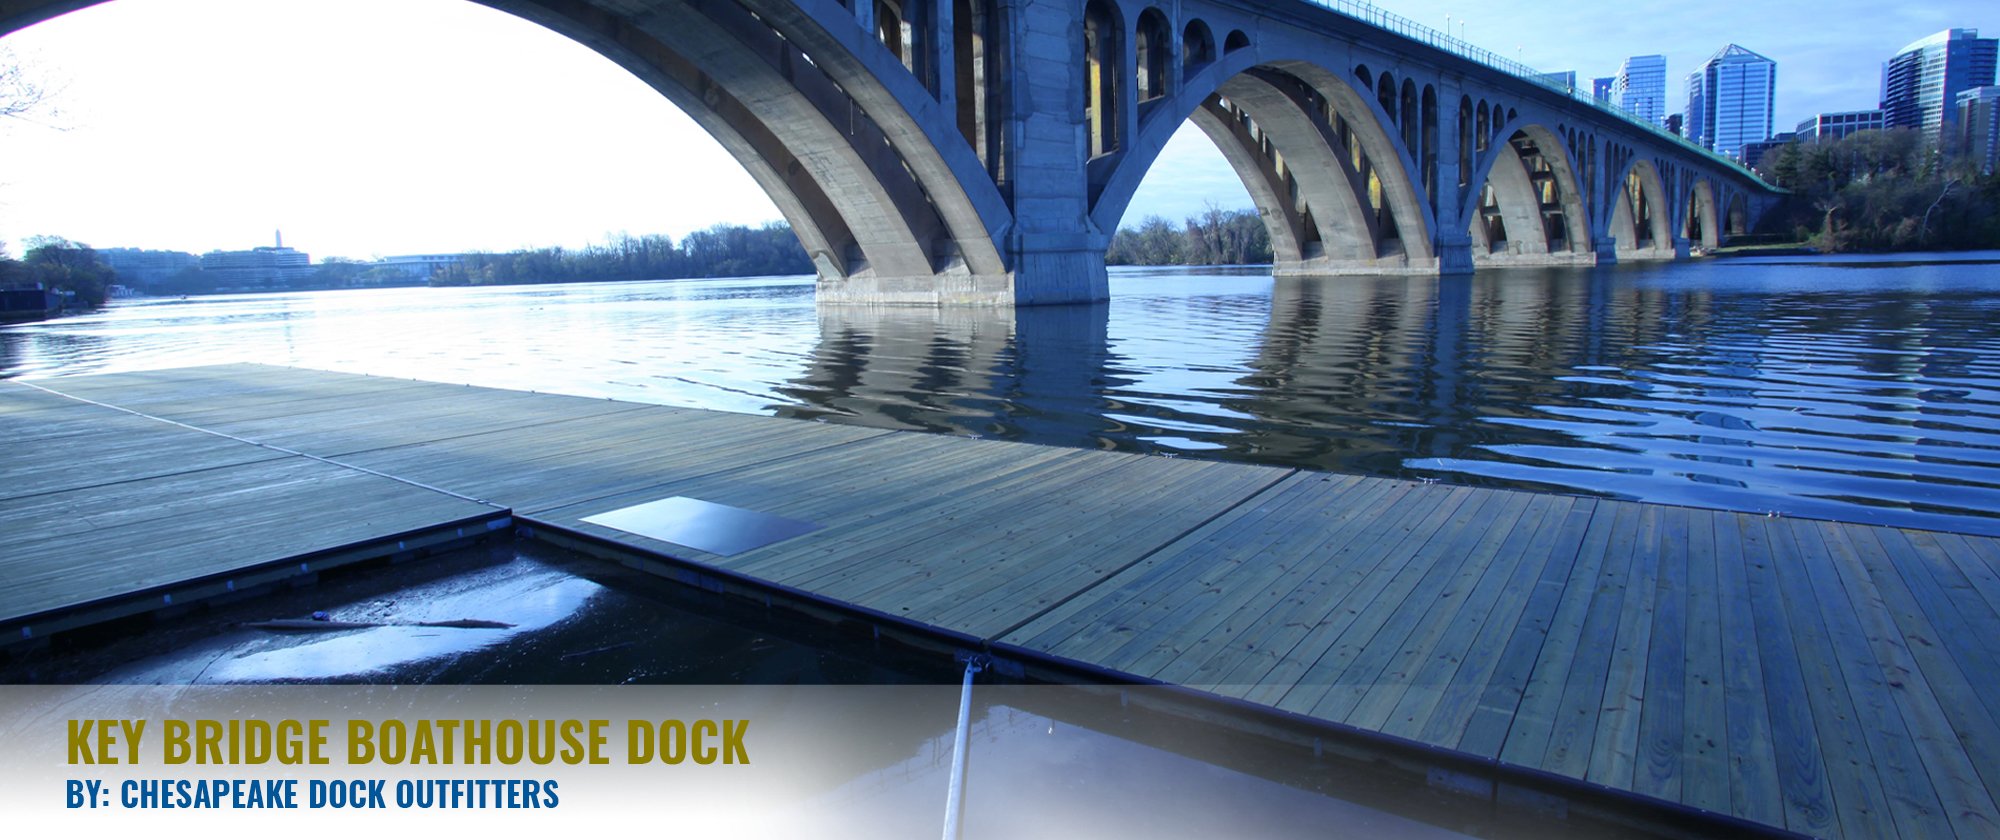 chesapeake dock added near the key bridge in baltimore, maryland